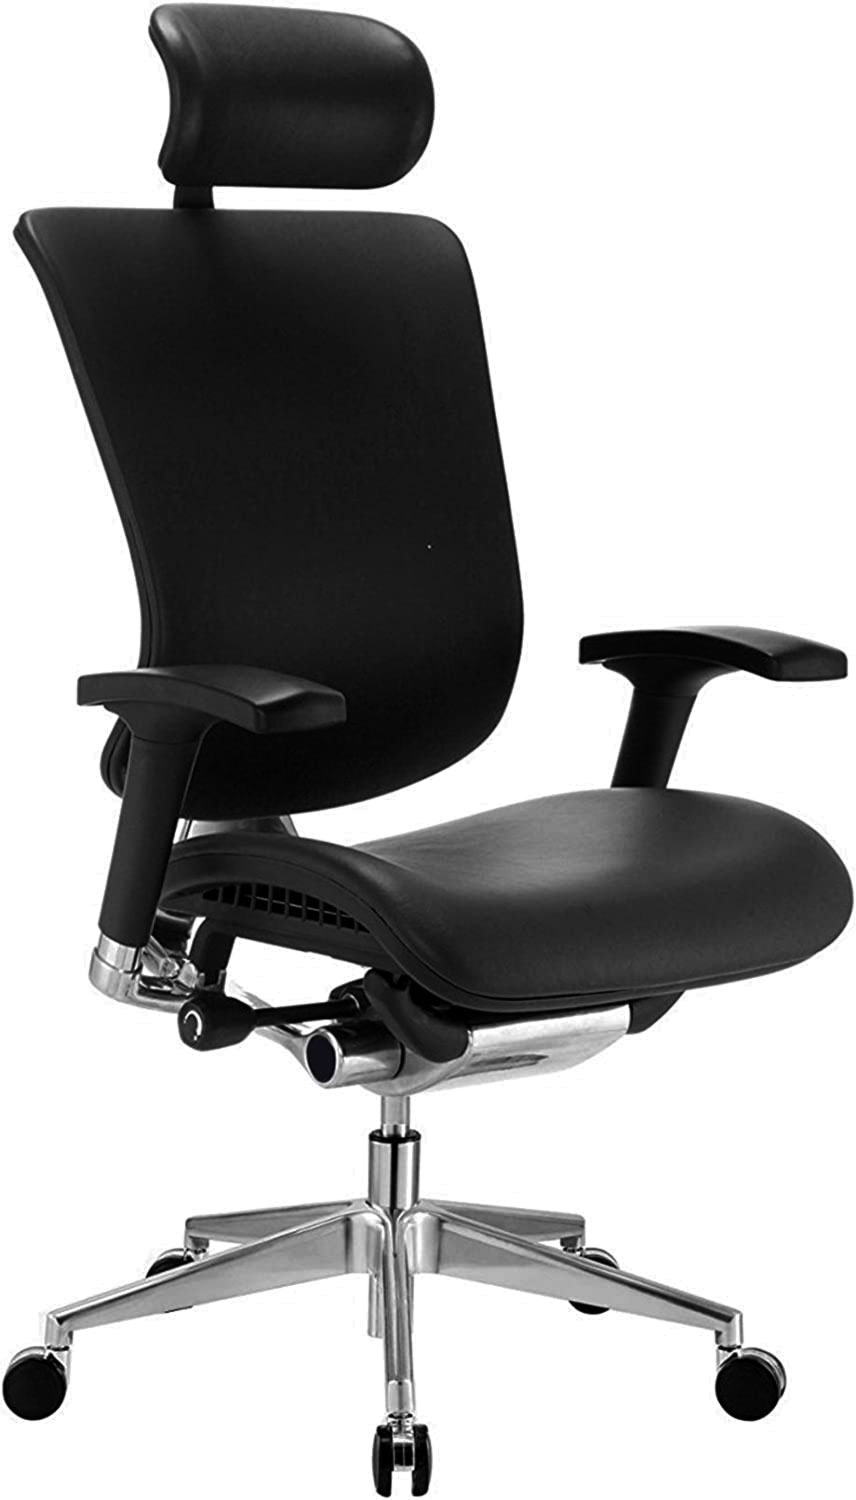 Dreem III Leather Executive Hi-Back Chair with Headrest